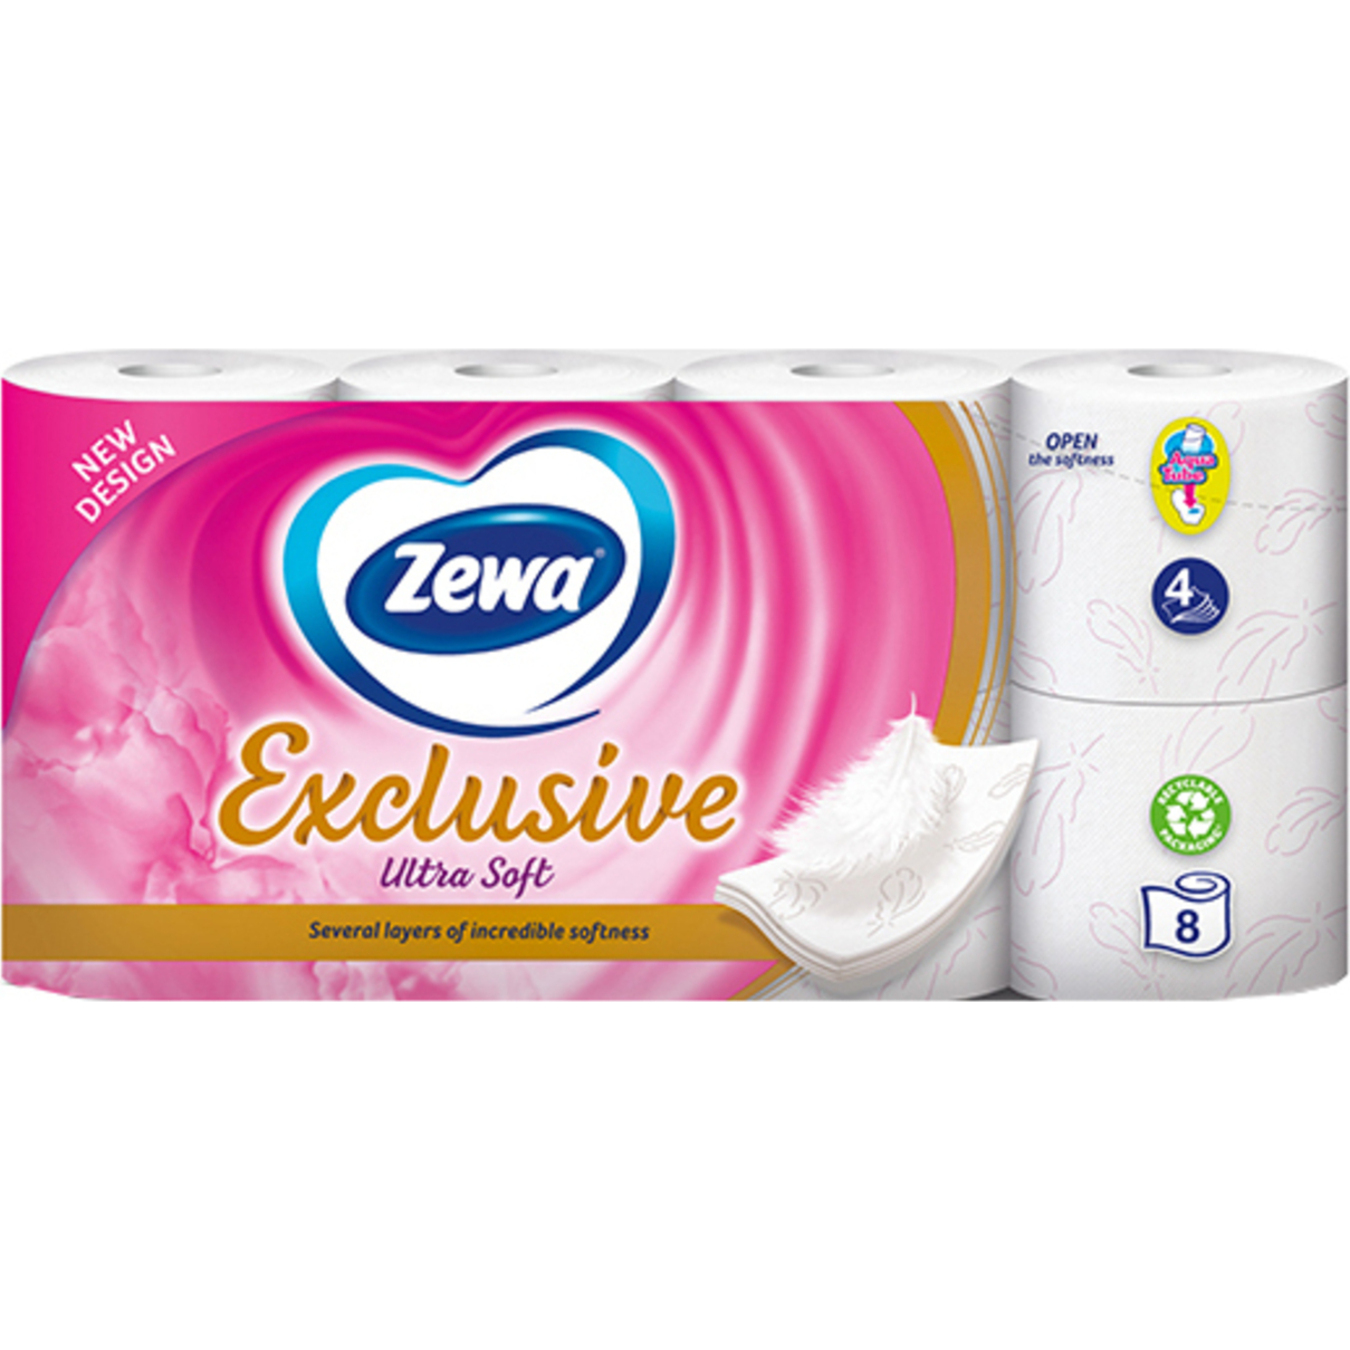 Zewa Exclusive Ultra Soft 4-Layer Toilet Paper 8pcs